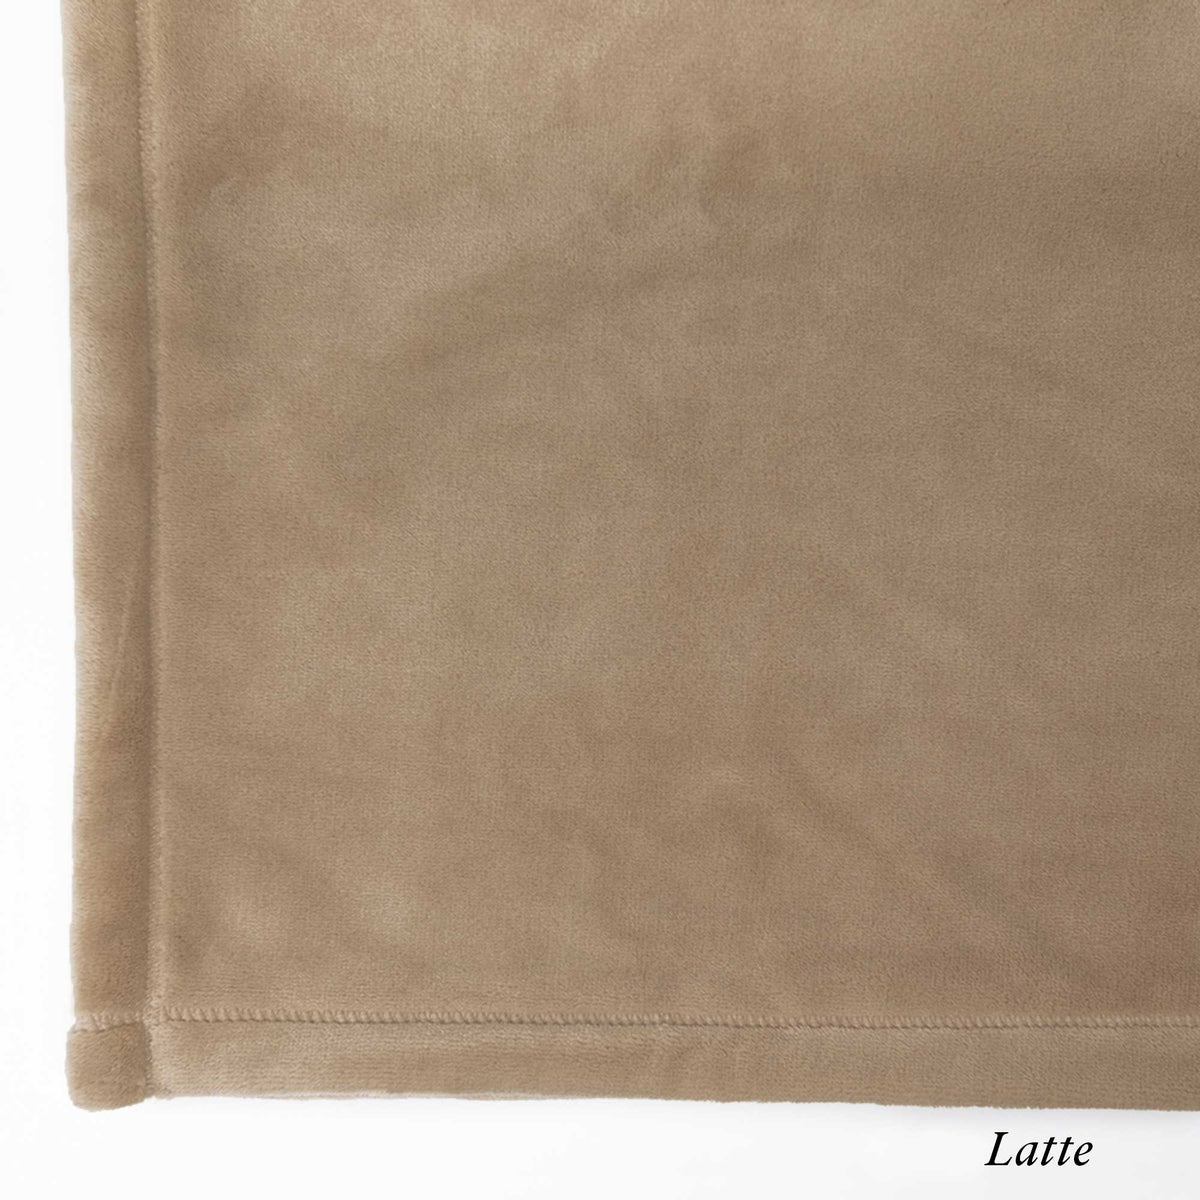 Latte Swatch - Fleece Pillowcase - Luster Loft - American Blanket Company